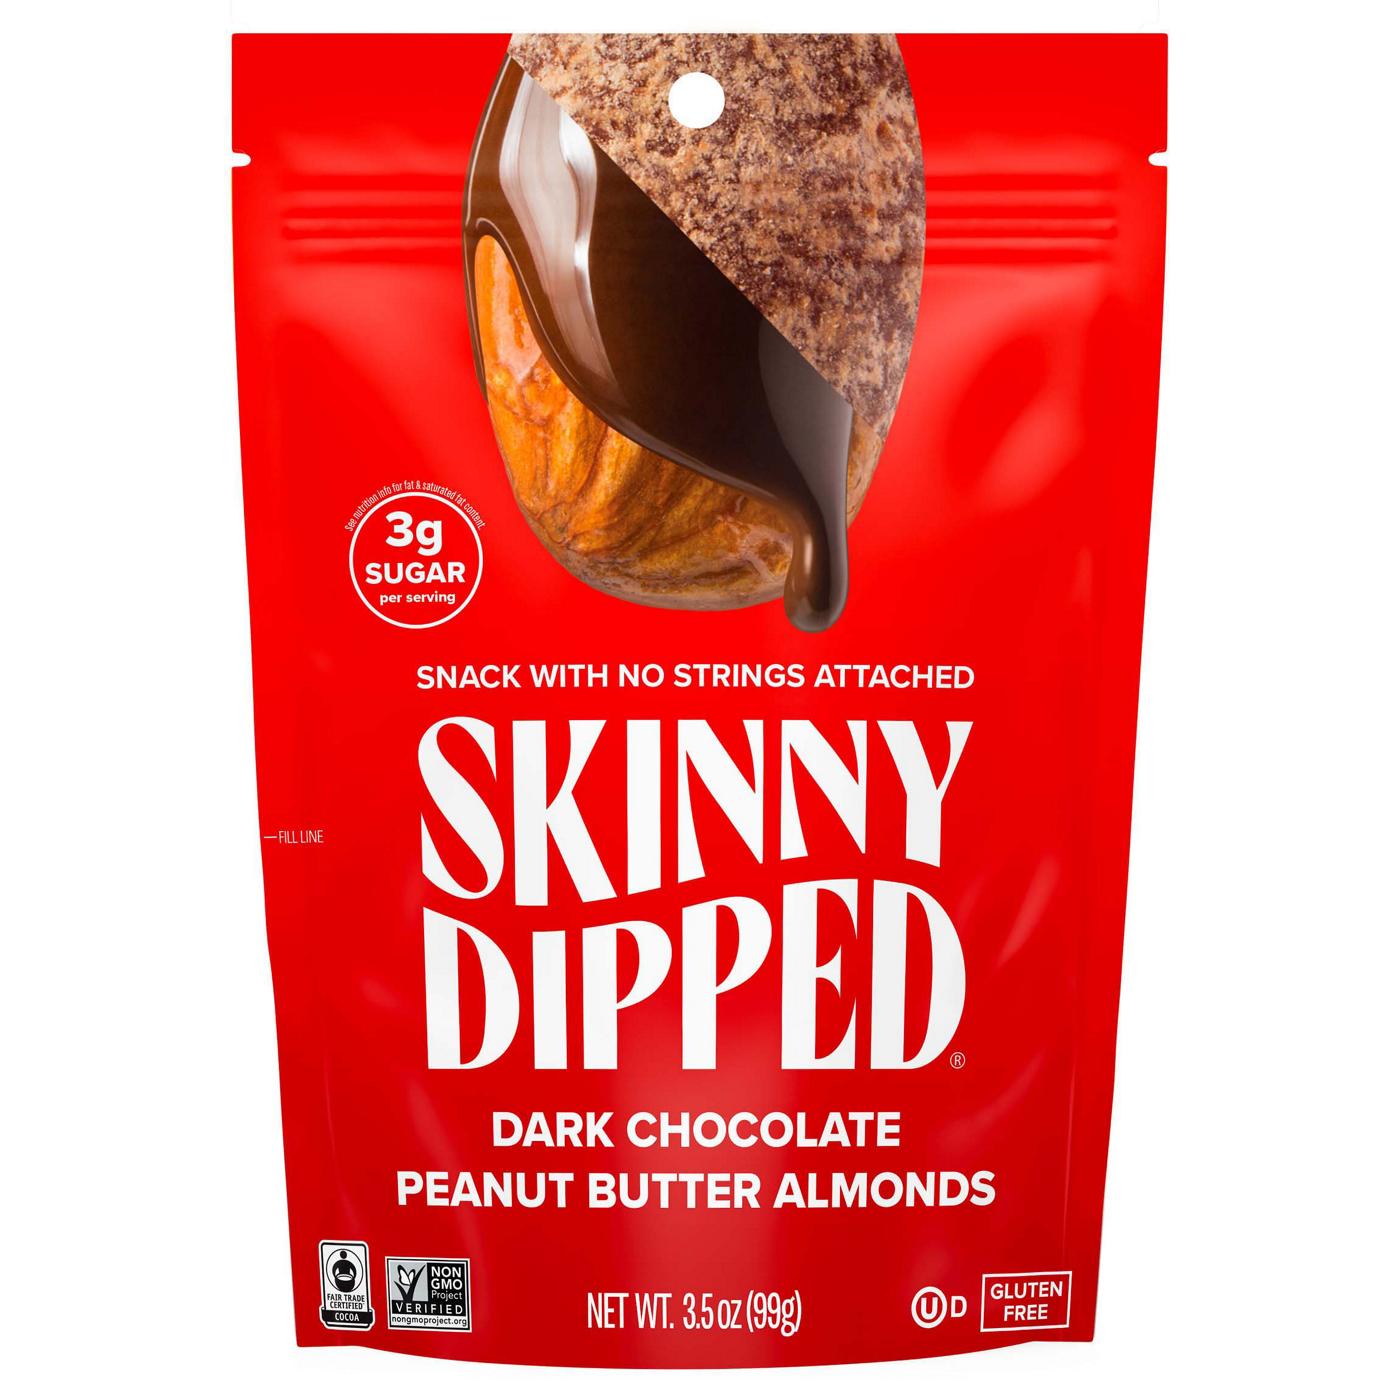 SkinnyDipped Dark Chocolate Peanut Butter Almonds; image 1 of 2